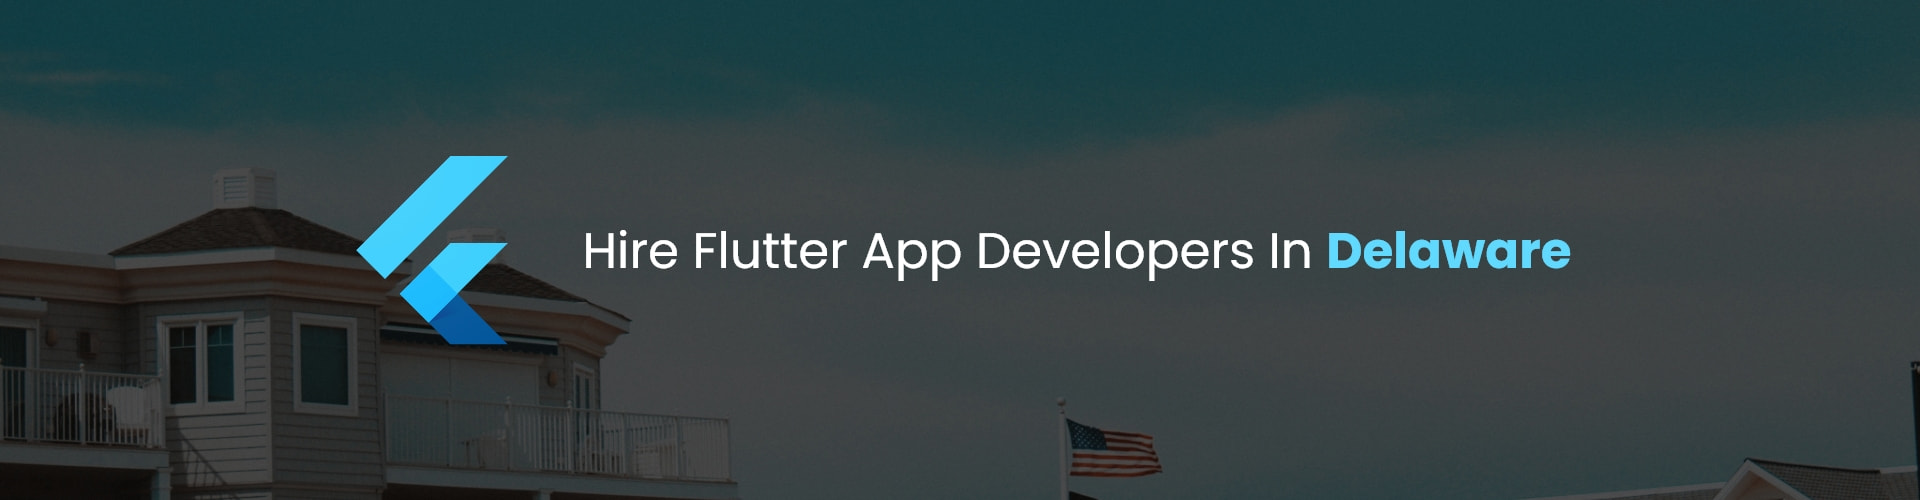 hire flutter app developers in delaware